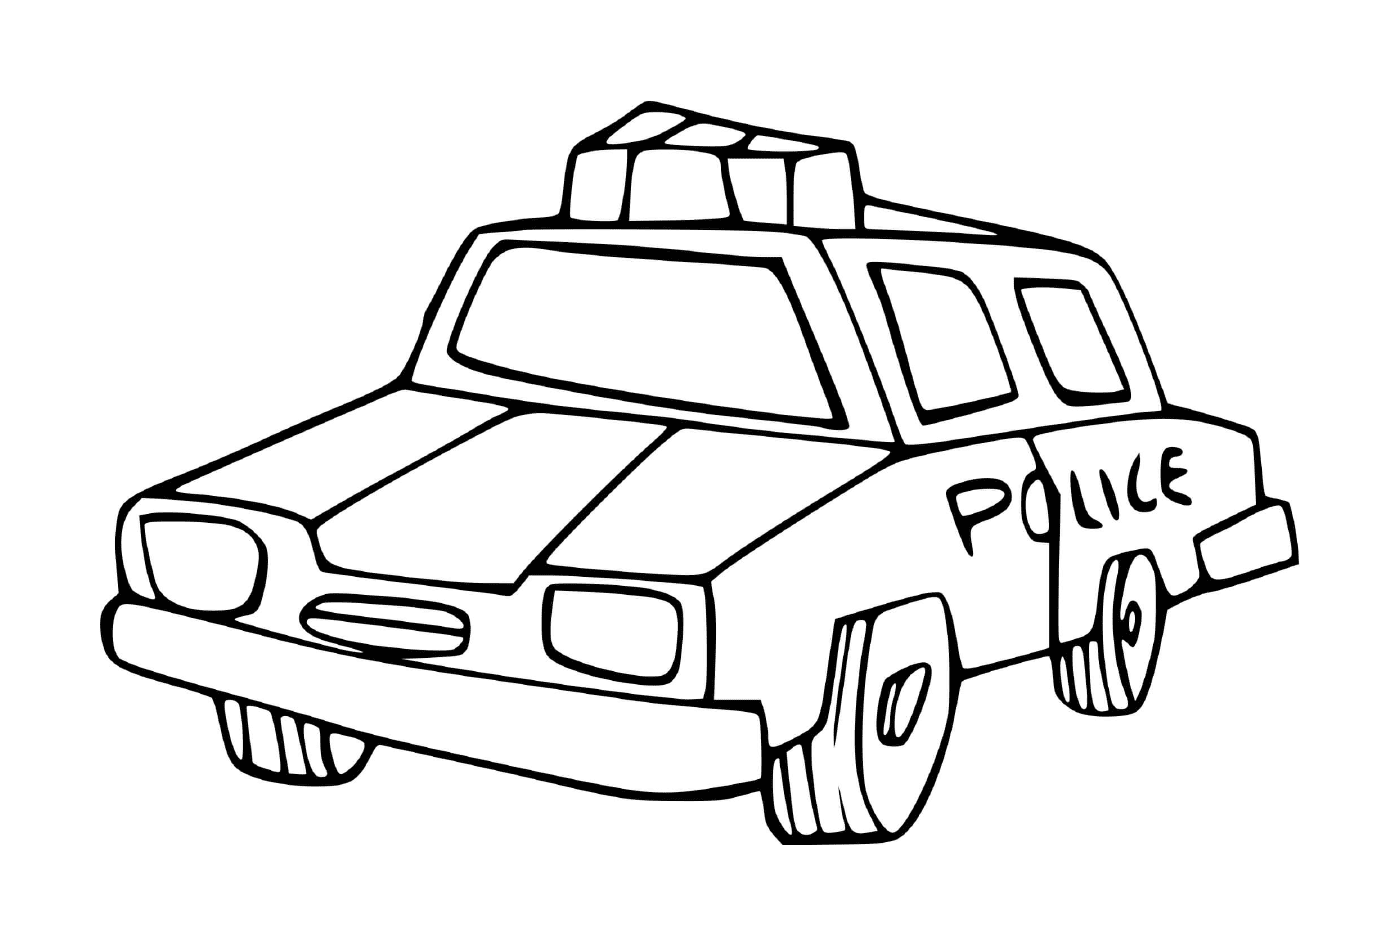  US police vehicle 